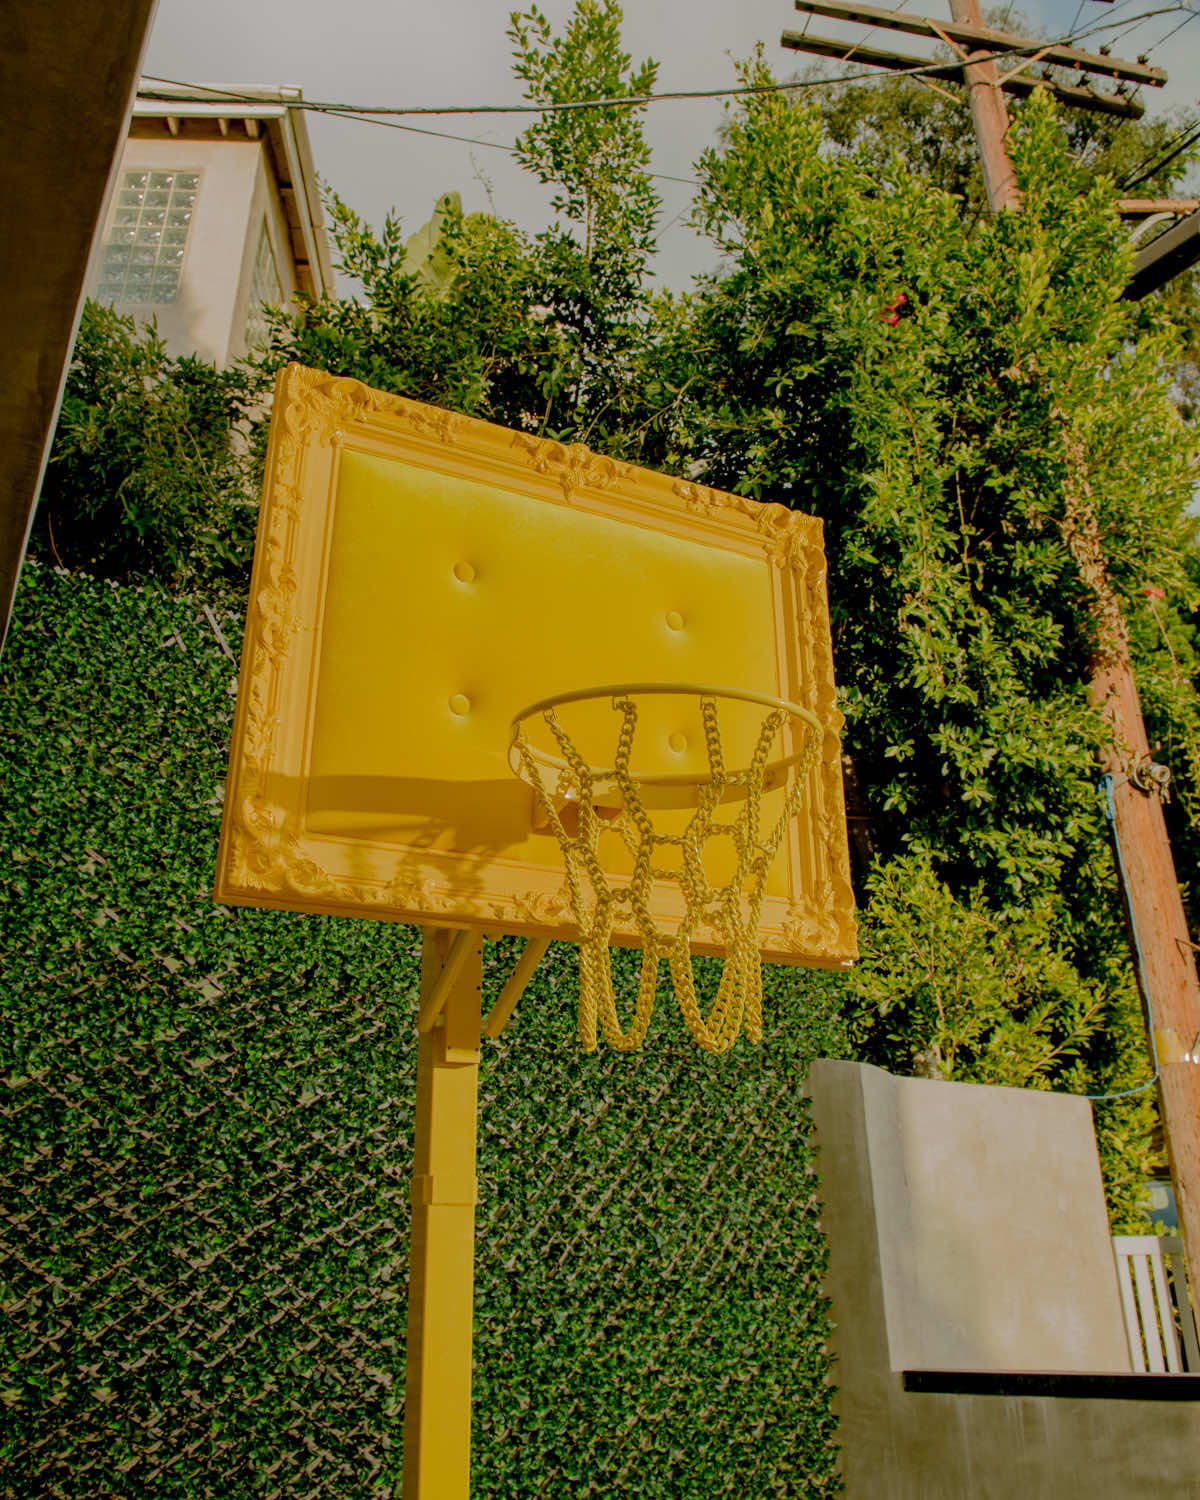 A yellow basketball hoop.